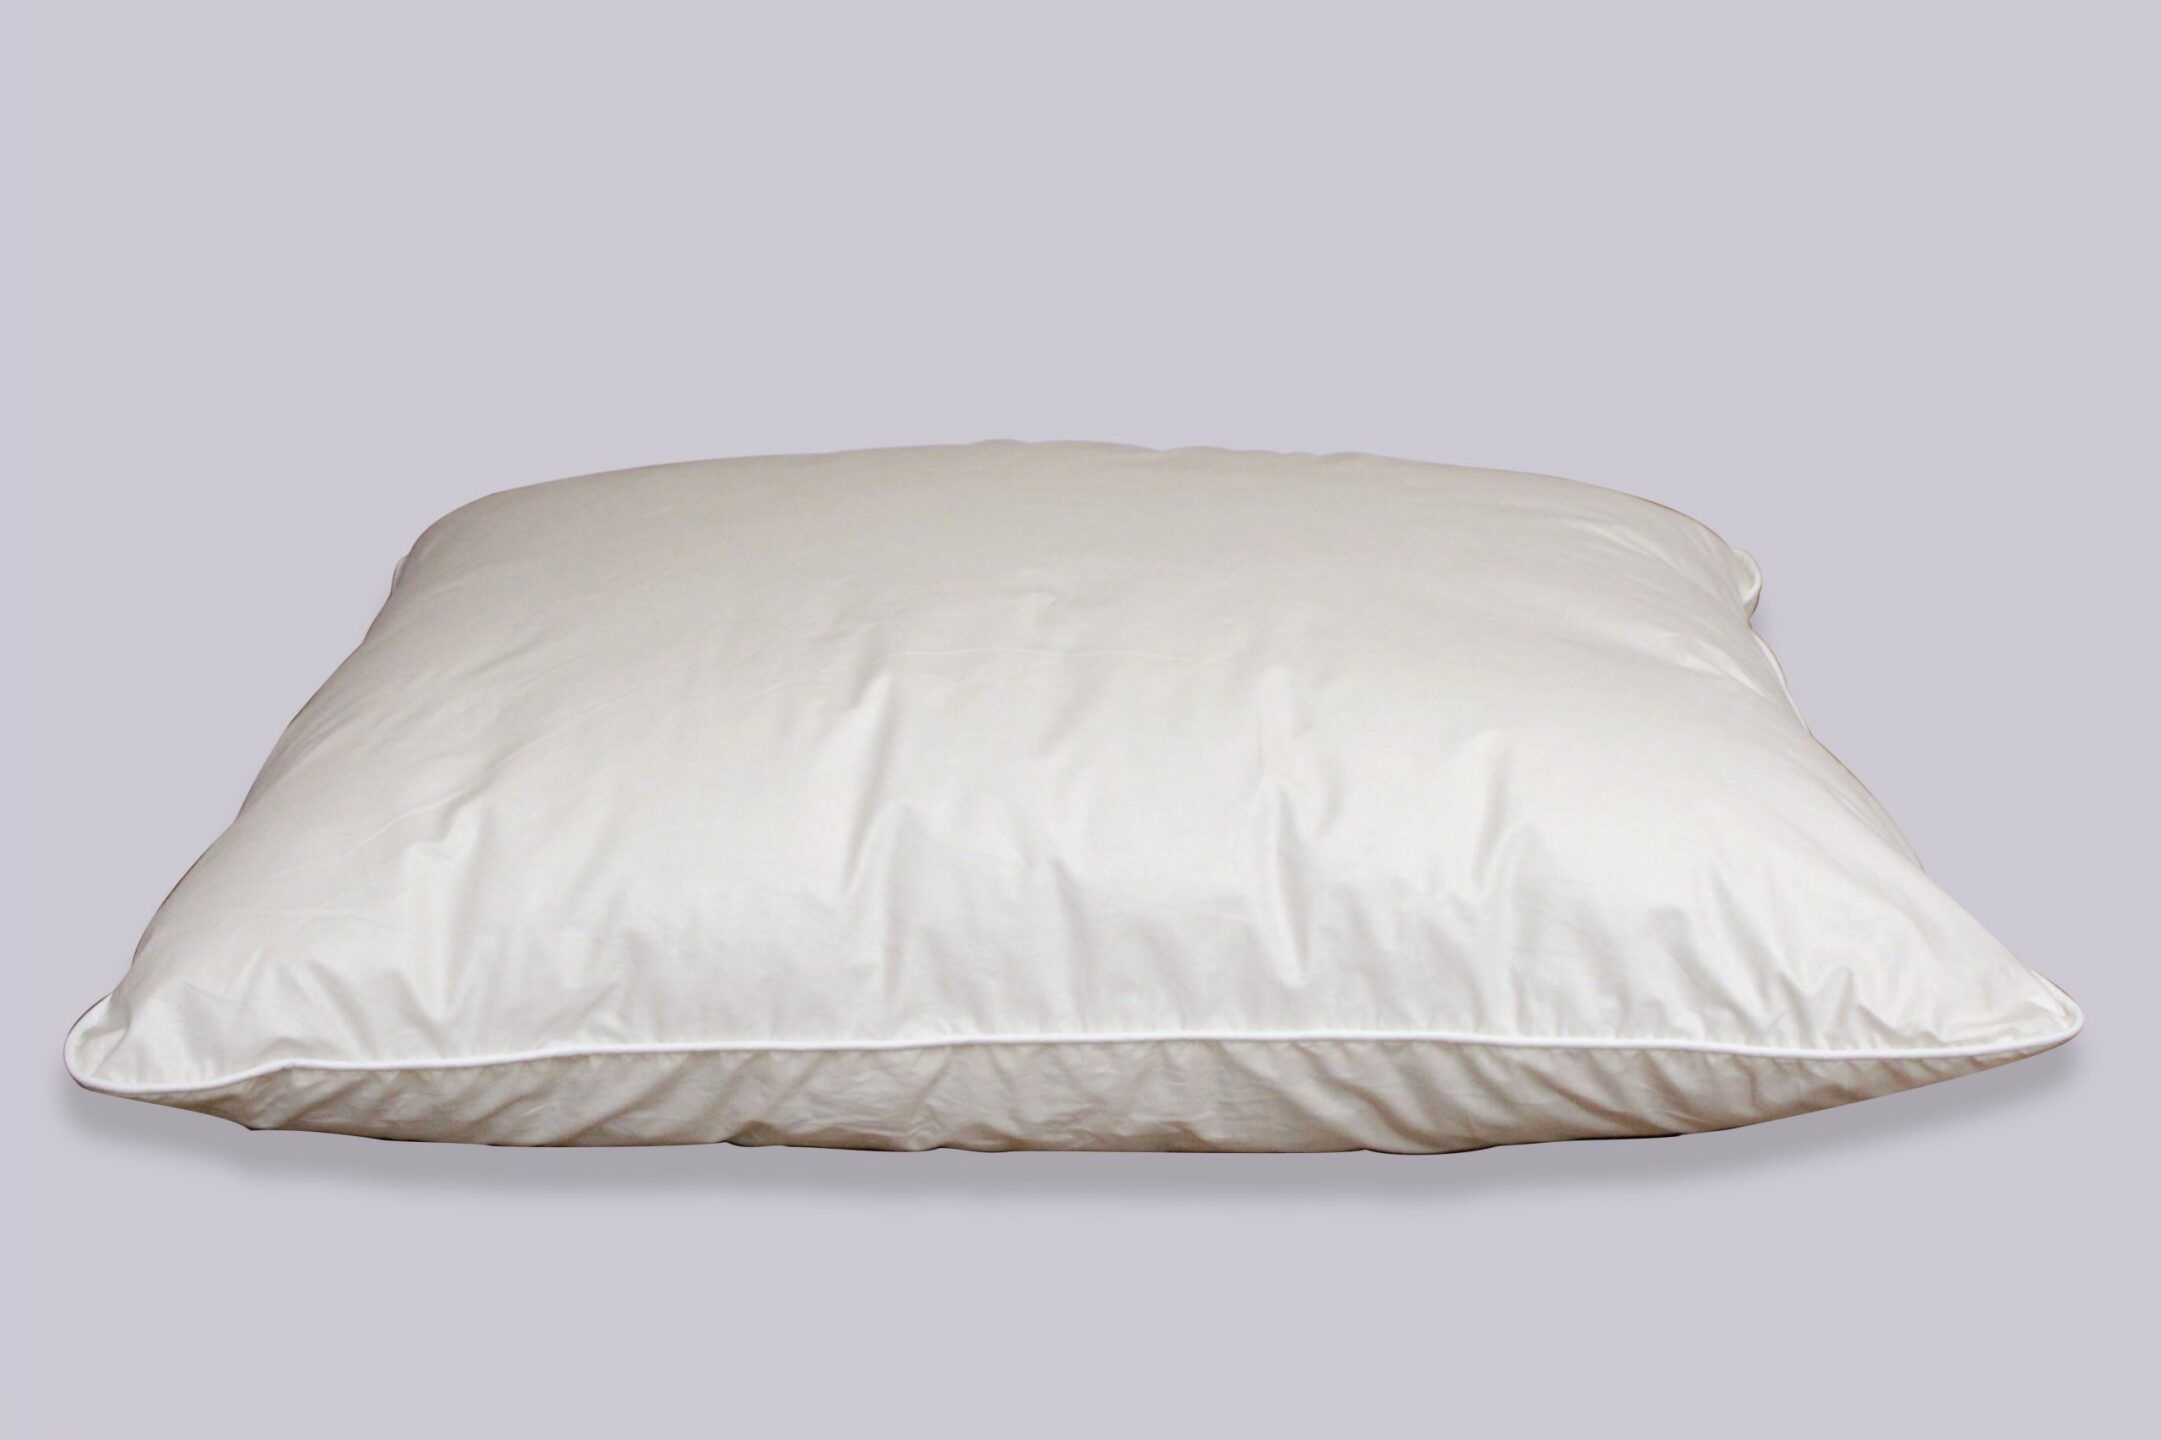 Ogallala Comfort Decorative Pillows